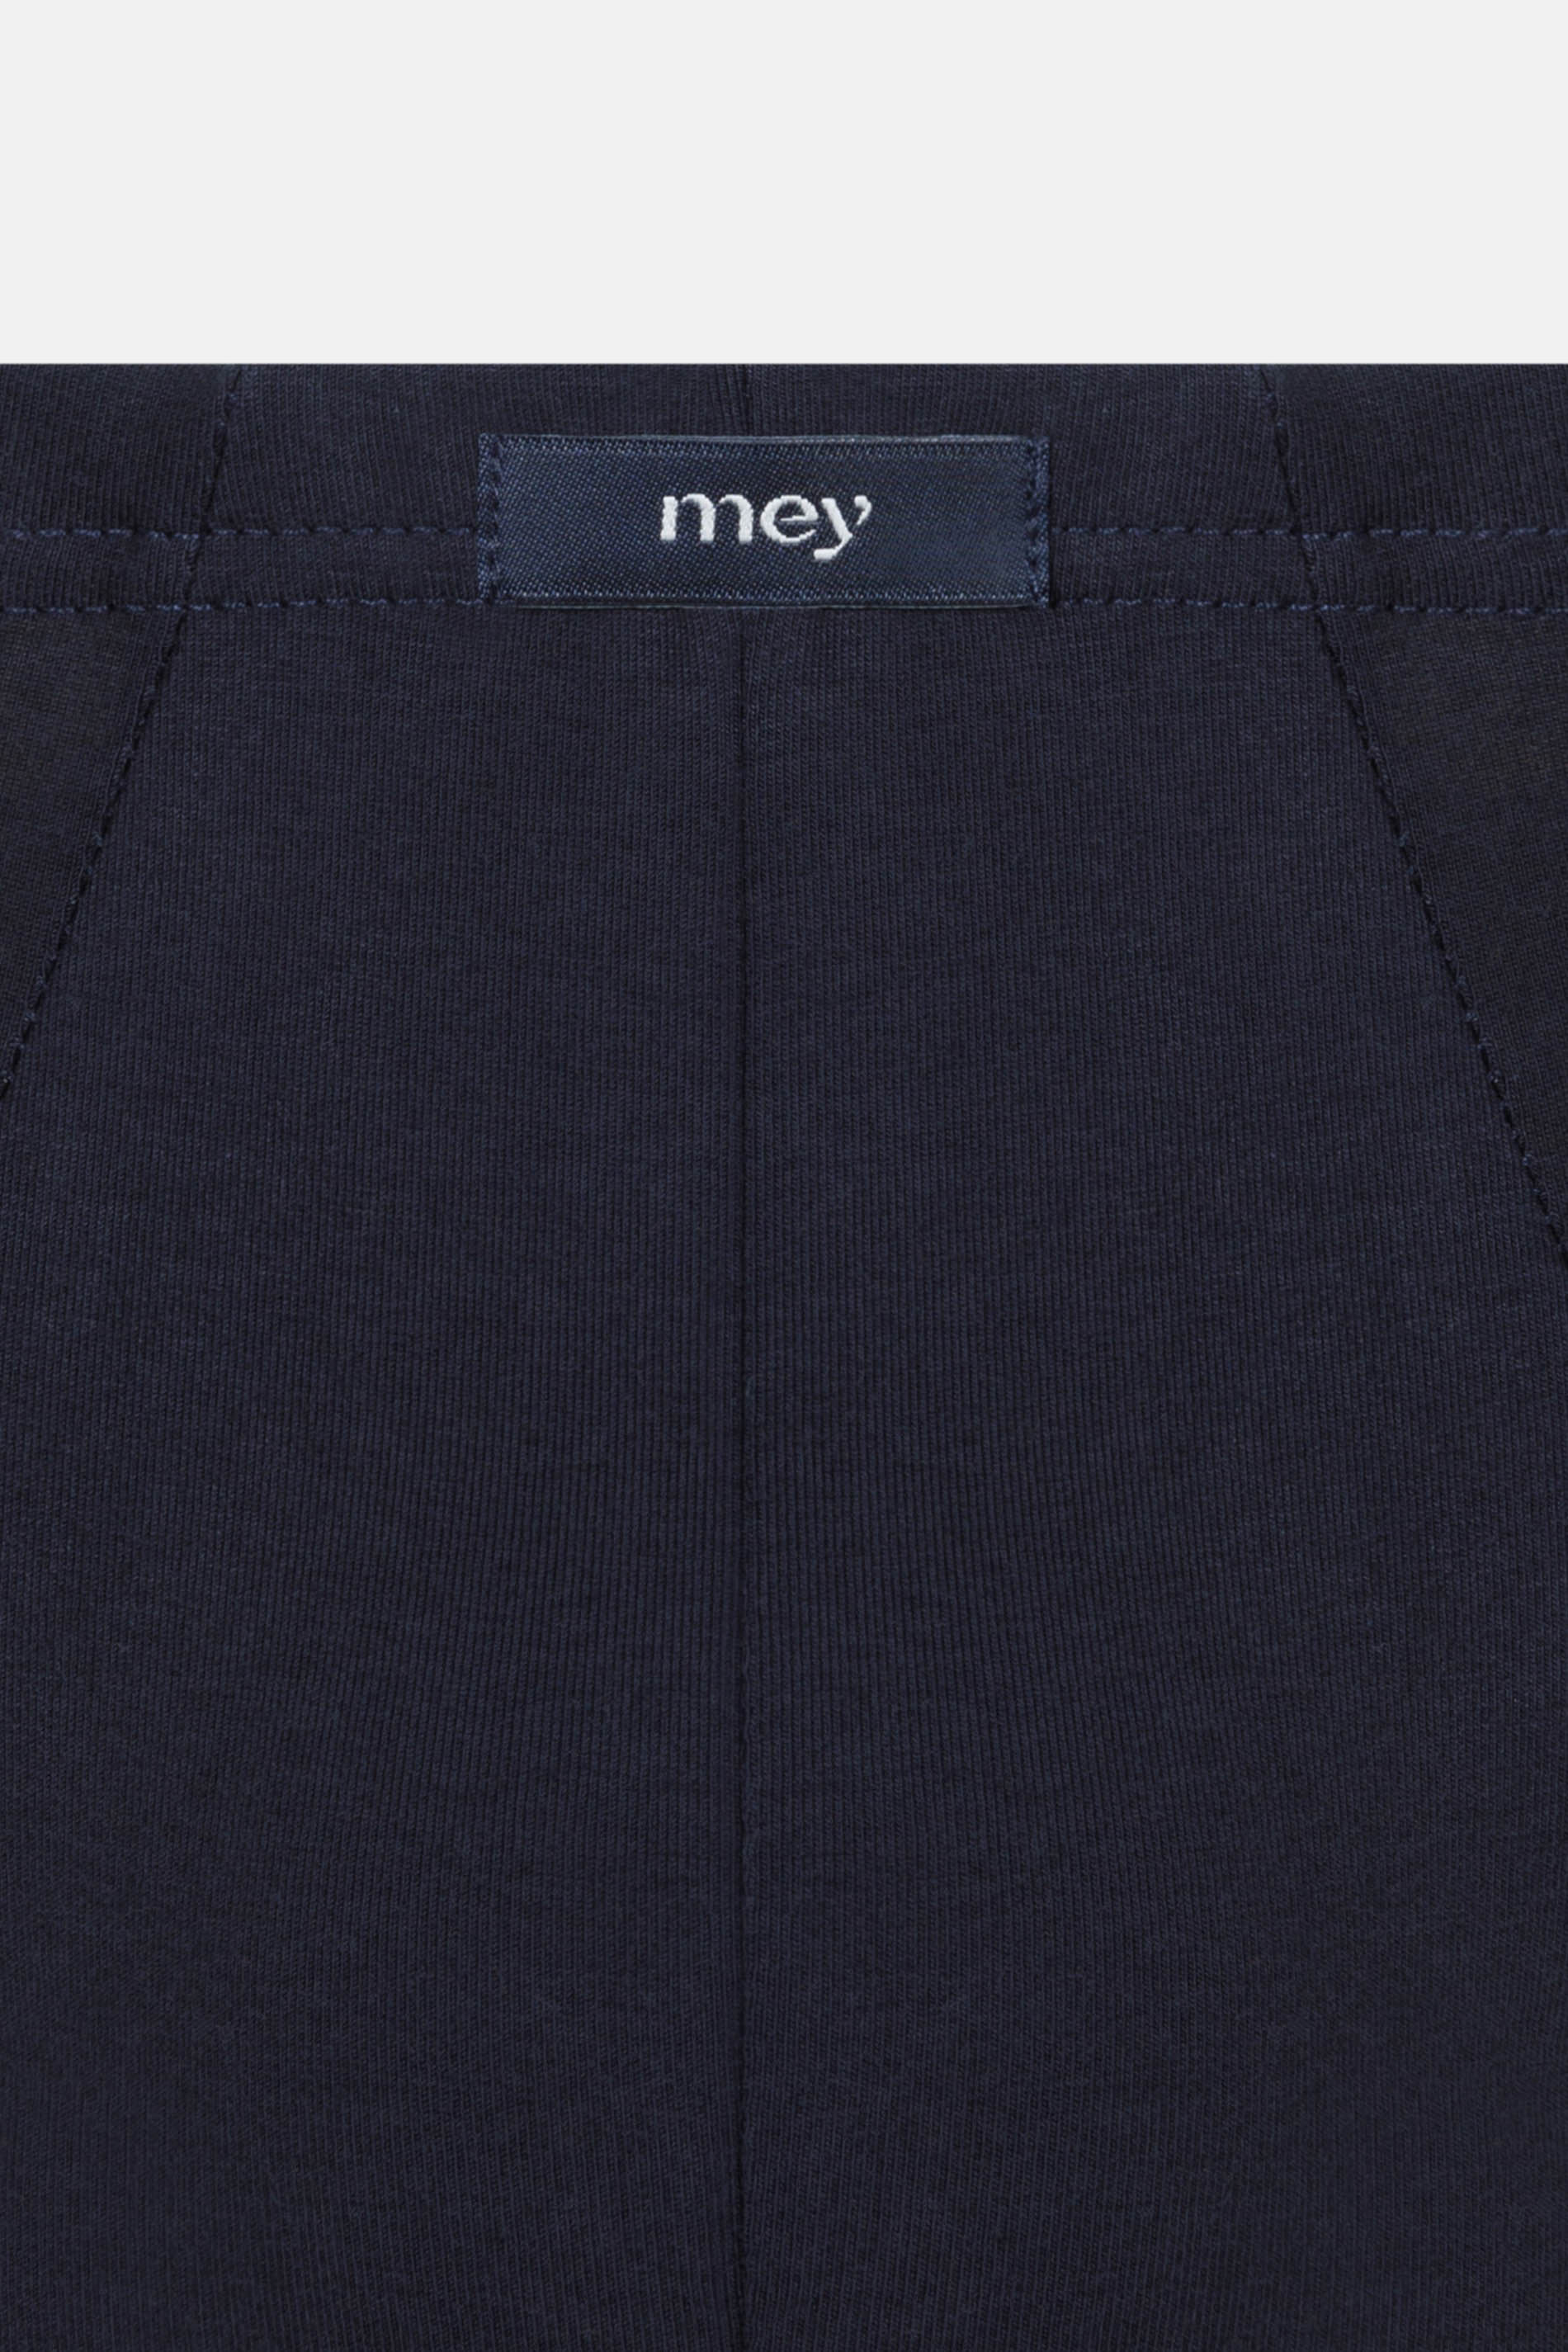 Shorty | Doppelpack Serie Jersey blue Farbe blau | mey® | Shortys